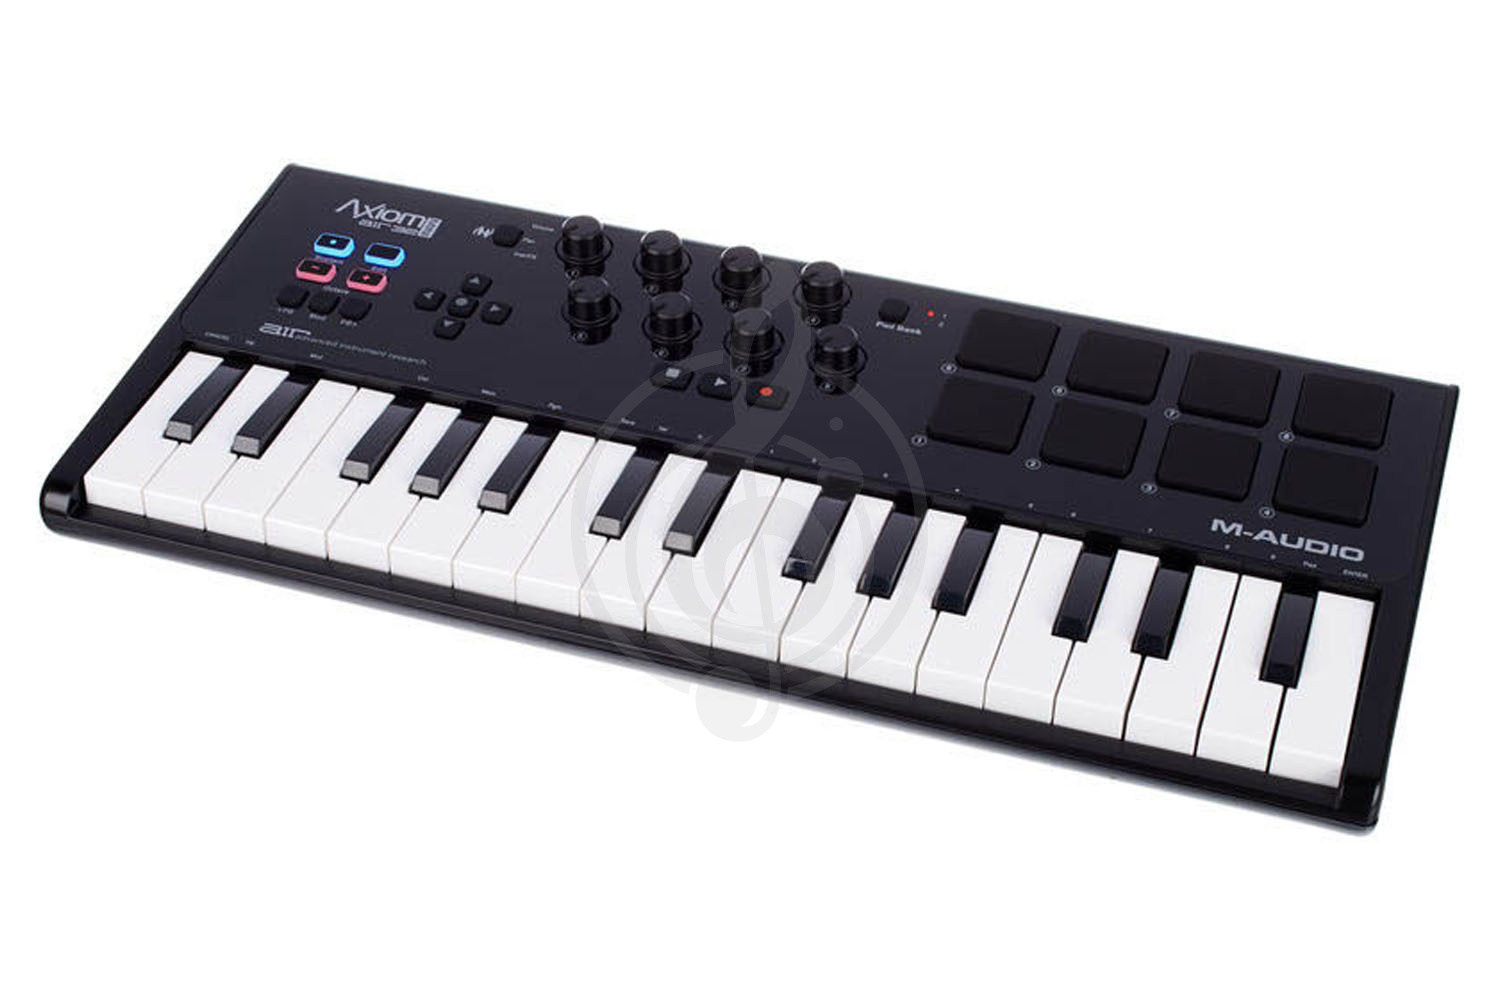 MIDI-клавиатура Миди-клавиатуры M-Audio M-Audio Axiom AIR MINI 32 - USB миди-клавиатура Axiom AIR MINI 32 - фото 1